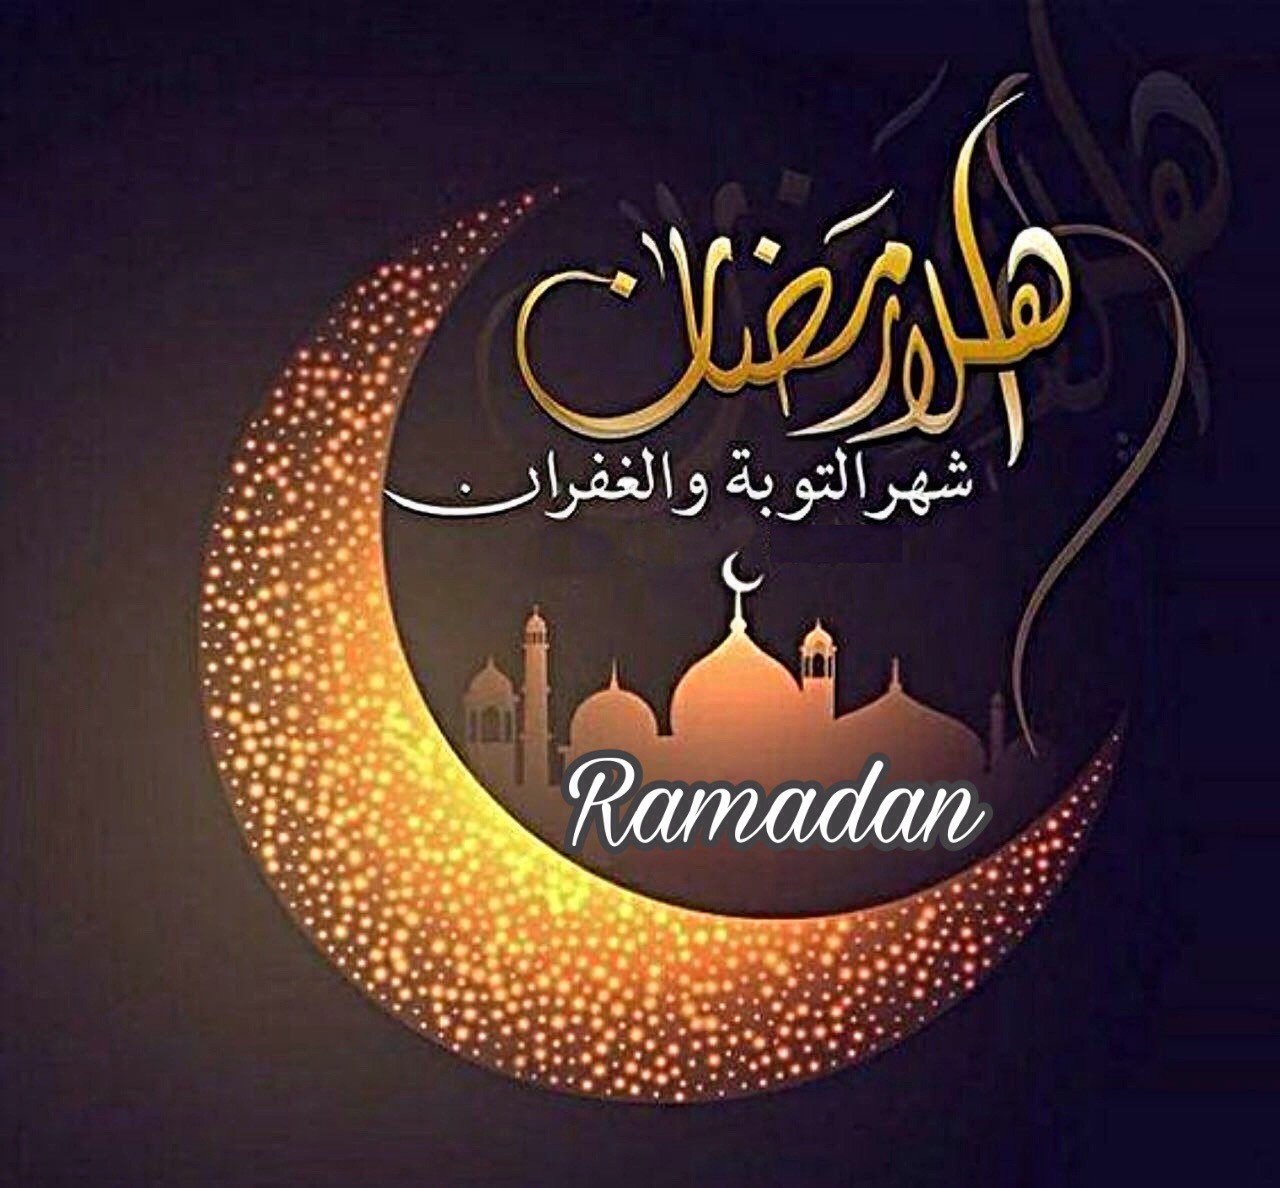 صور رمضان 2020 أجمل صور فوانيس رمضان 2021 بطاقات تهنئة لرمضان تهنئة رمضان بالأسماء 27